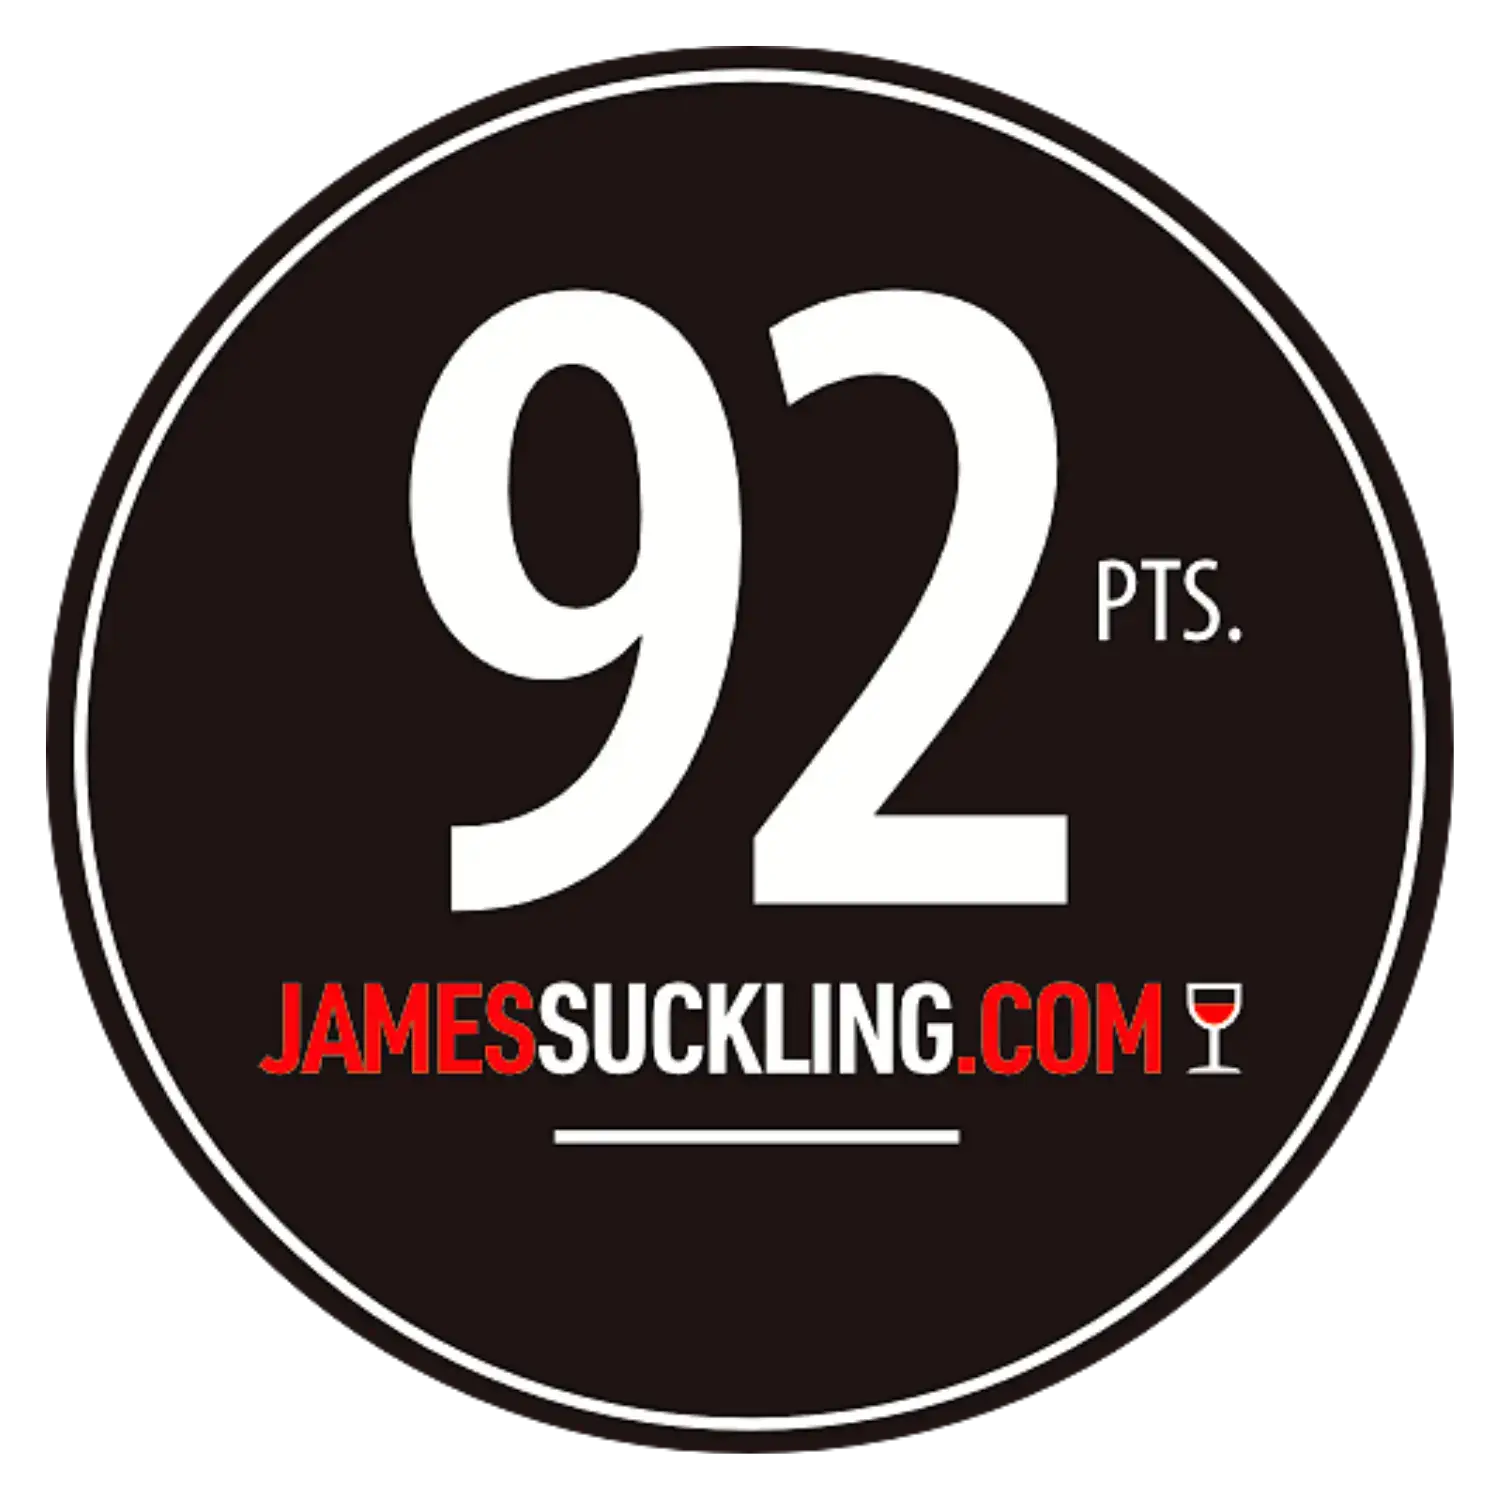 Sigla cu fundal negru si numarul de puncte in culoare alba reprezentand premiul James Suckling 92 puncte